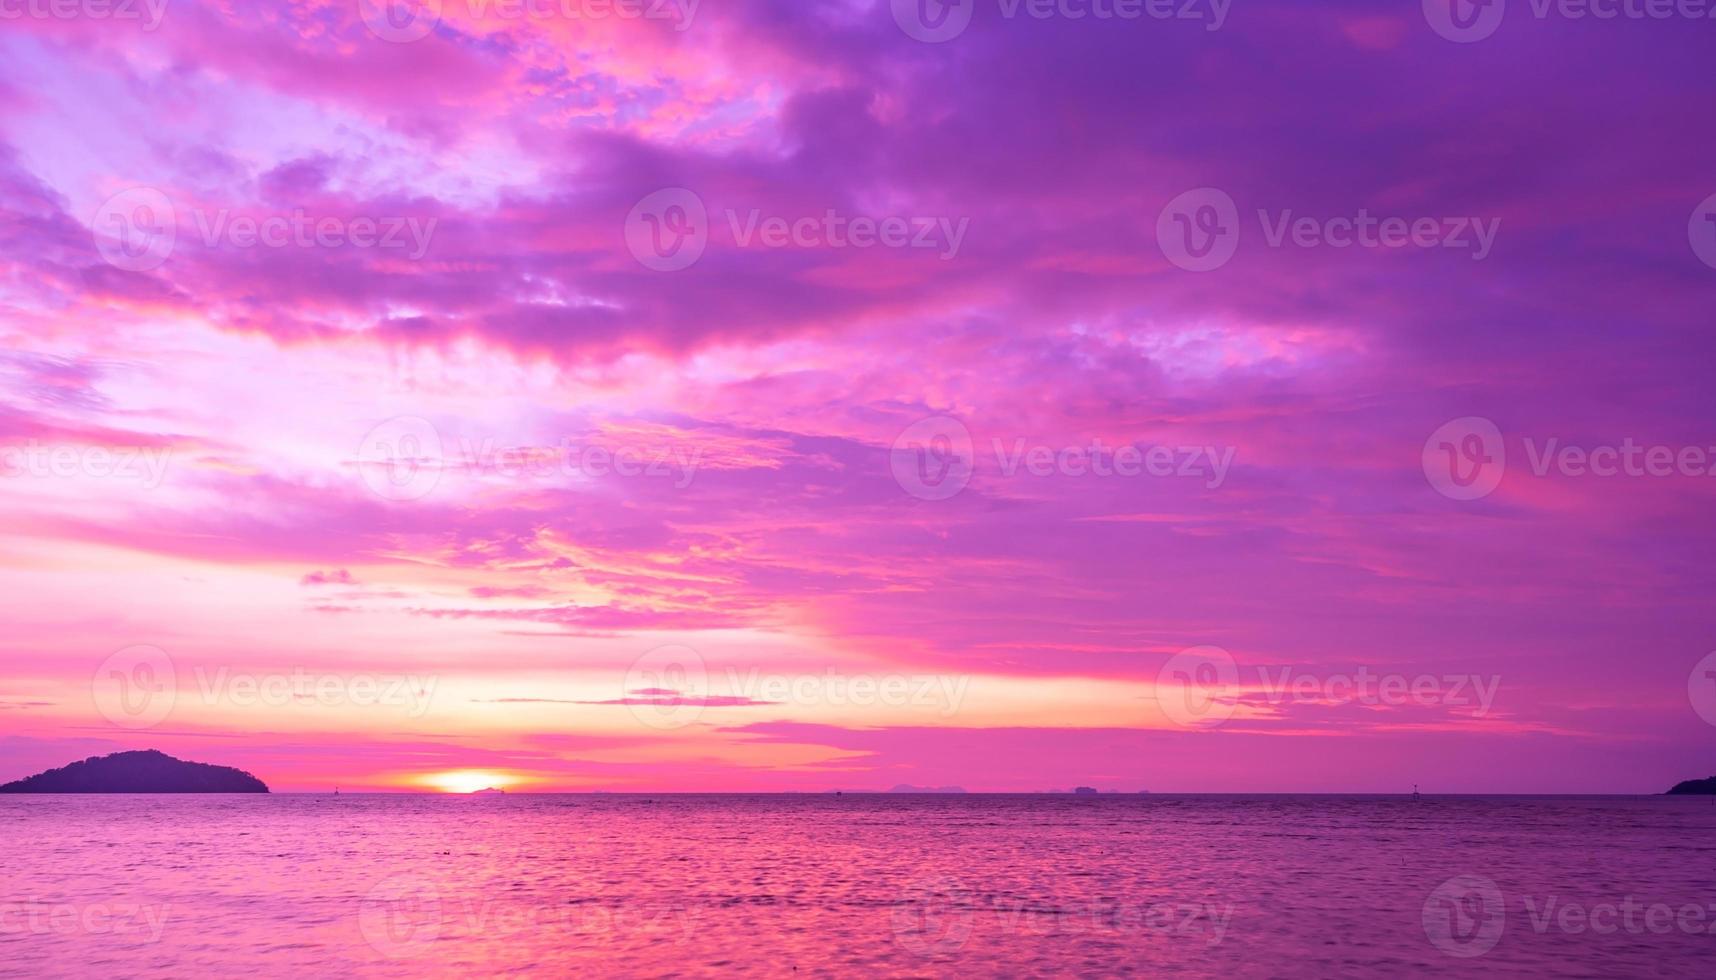 Purple sky trend background. Sunset or sunrise sky clouds over sea sunlight in Phuket Thailand Amazing nature landscape seascape.Beautiful light nature landscape colorful background photo